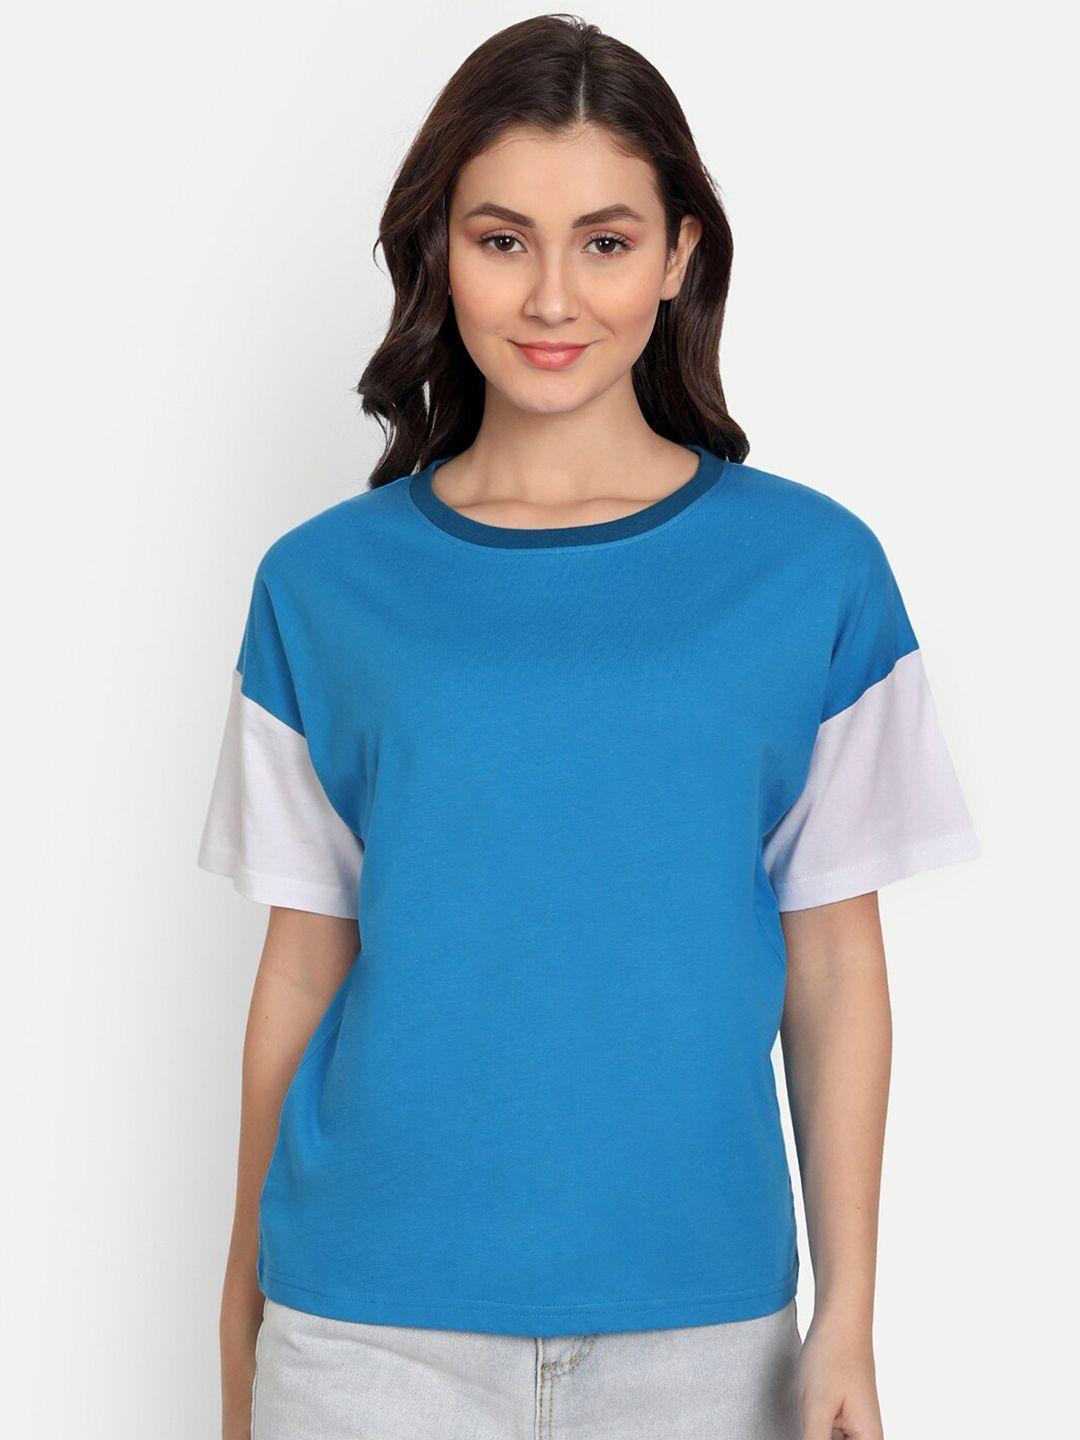 iki chic women blue colourblocked cotton t-shirt